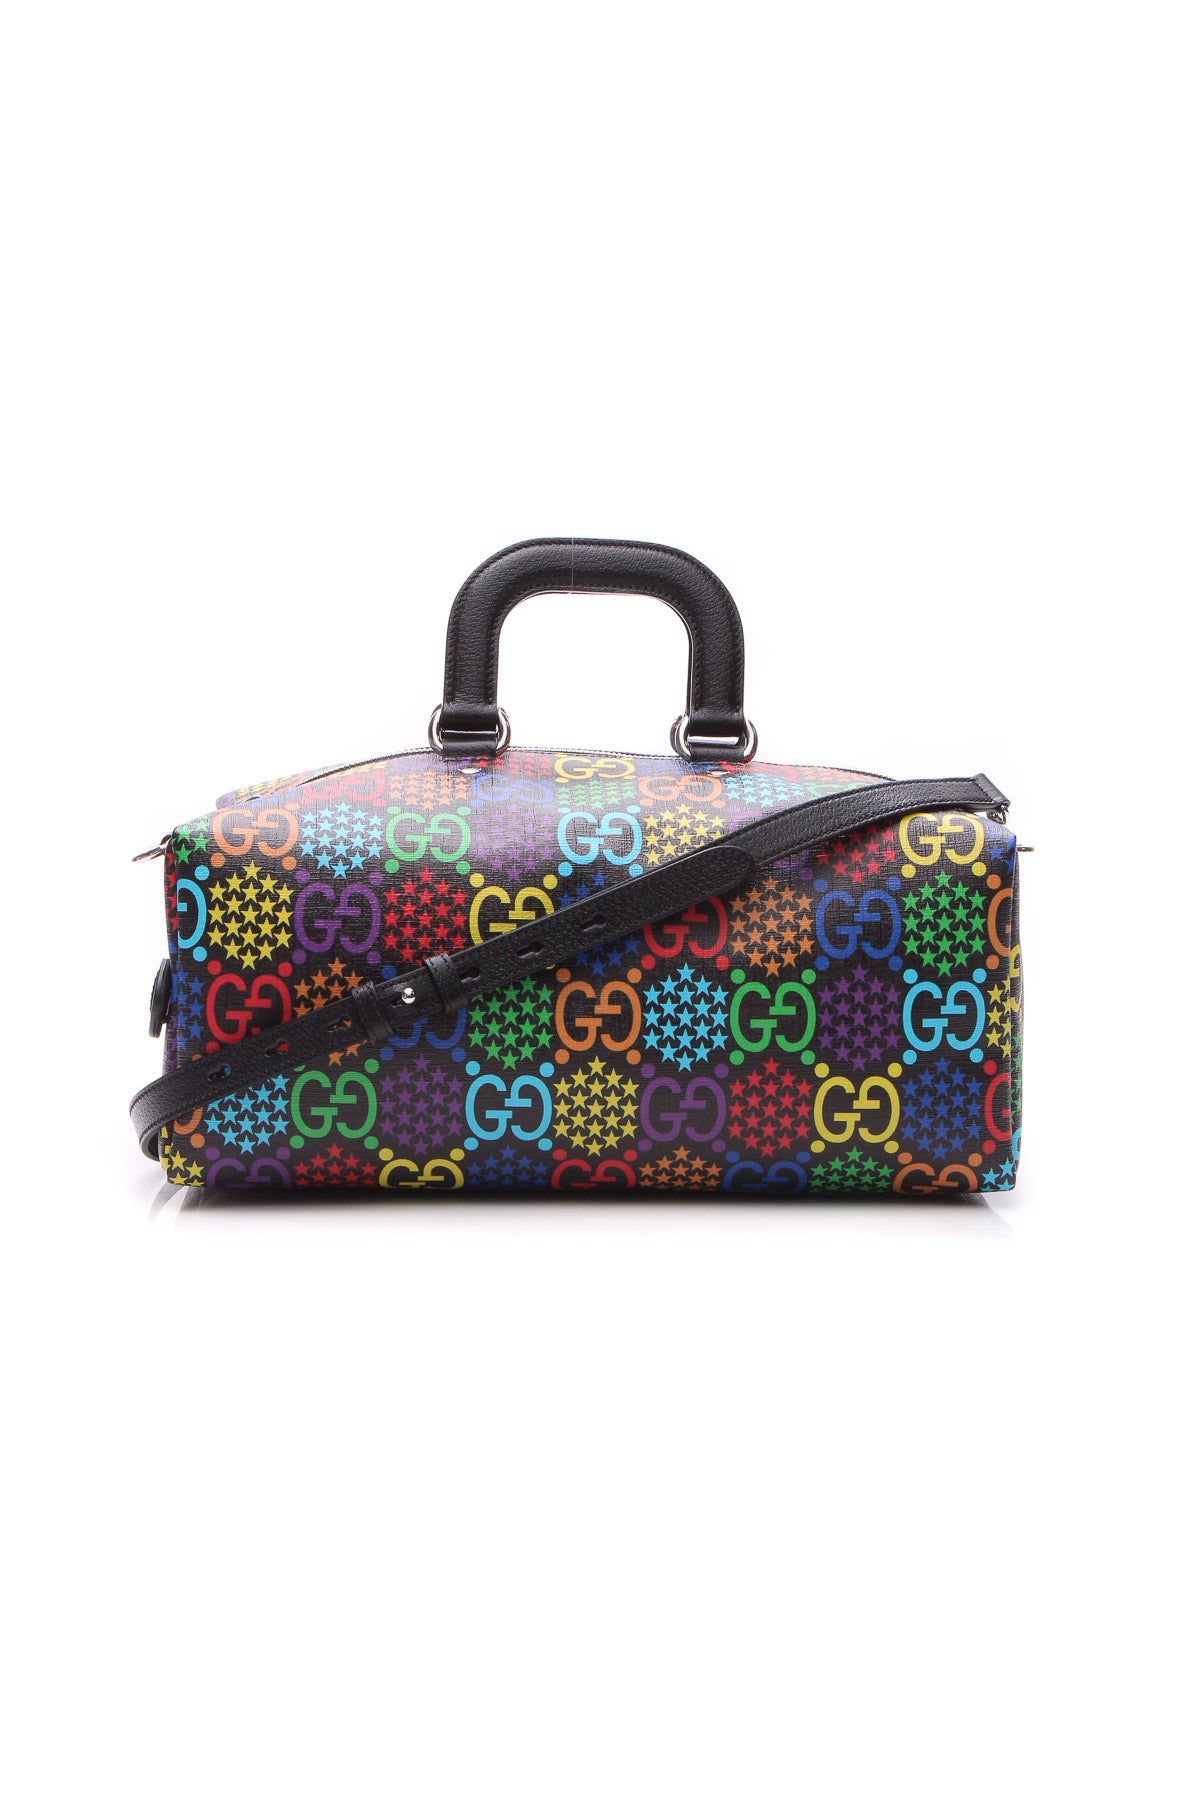 Gucci GG Diamante Duffle Bag - Red Luggage and Travel, Handbags